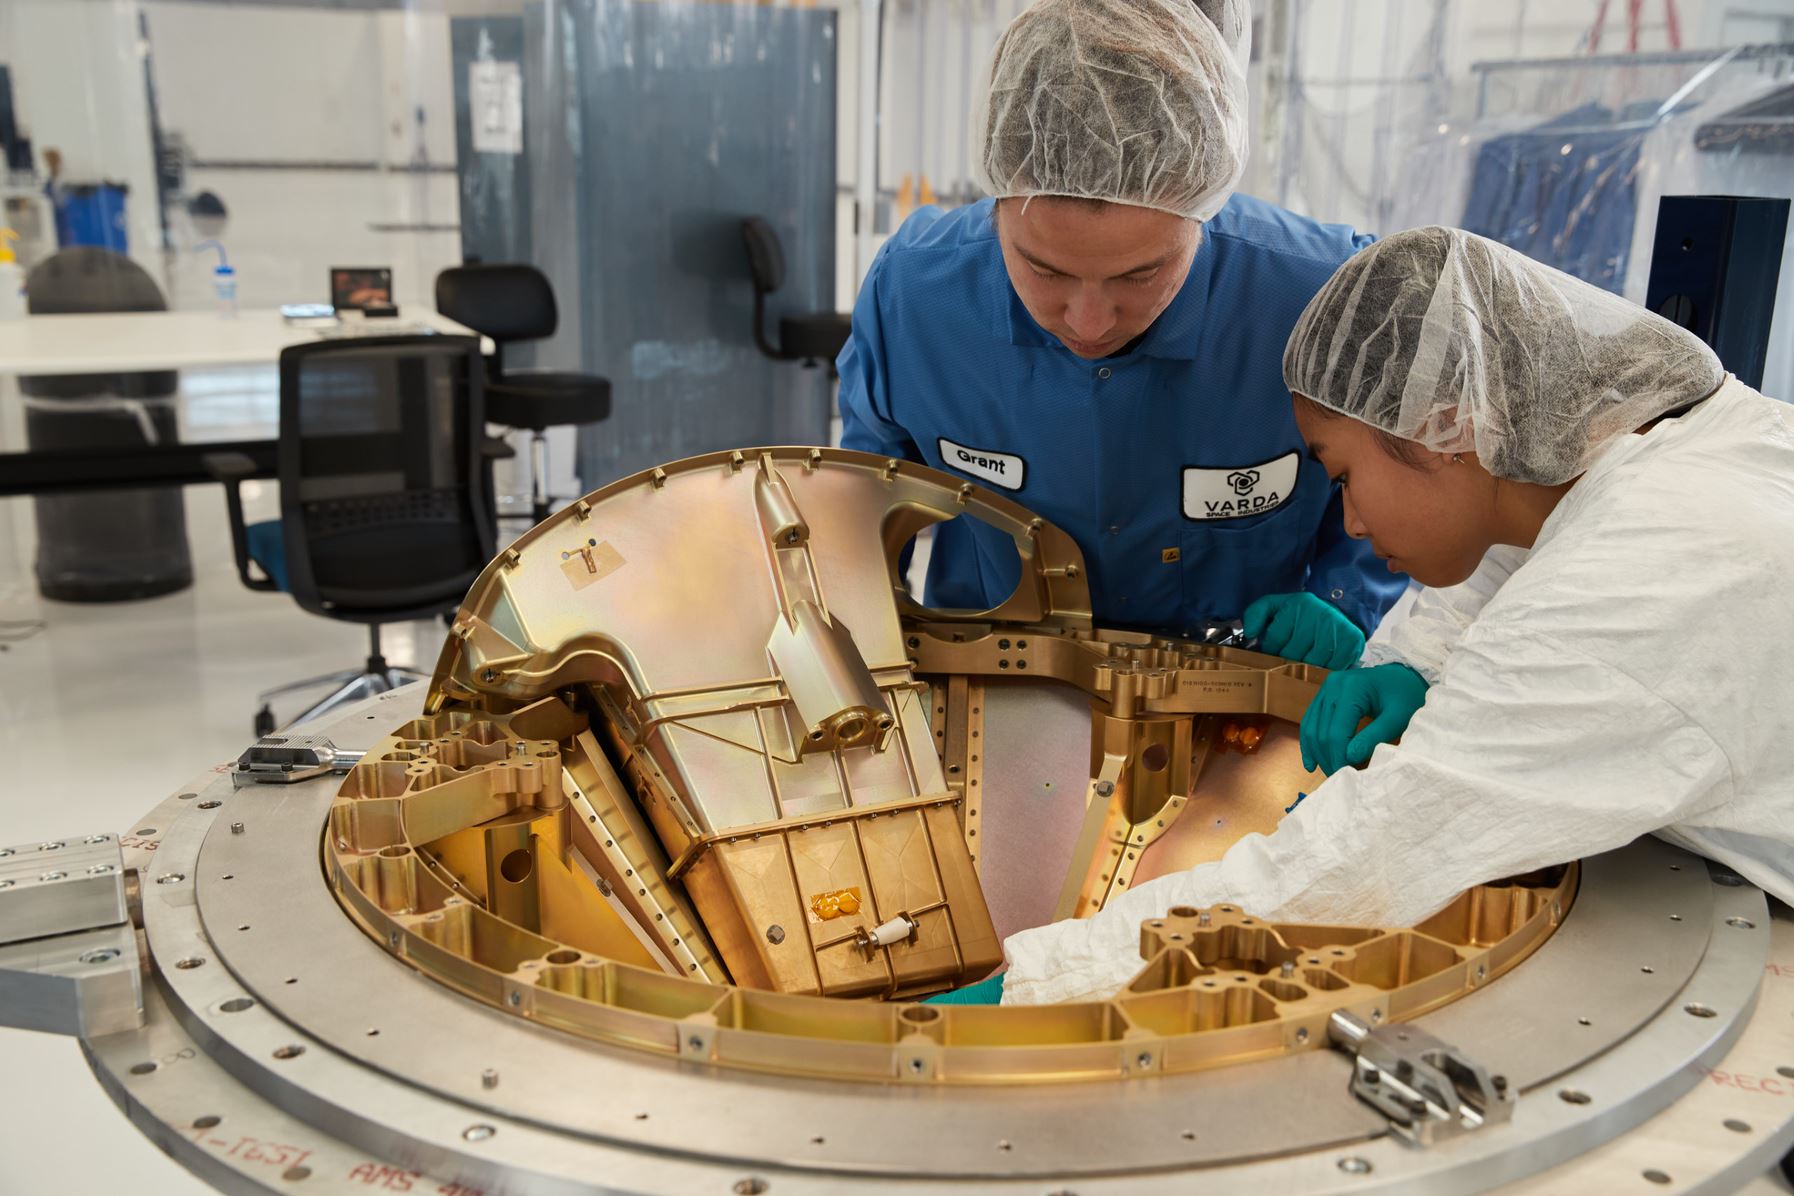 Varda employees integrate one of Varda’s first spacecraft.